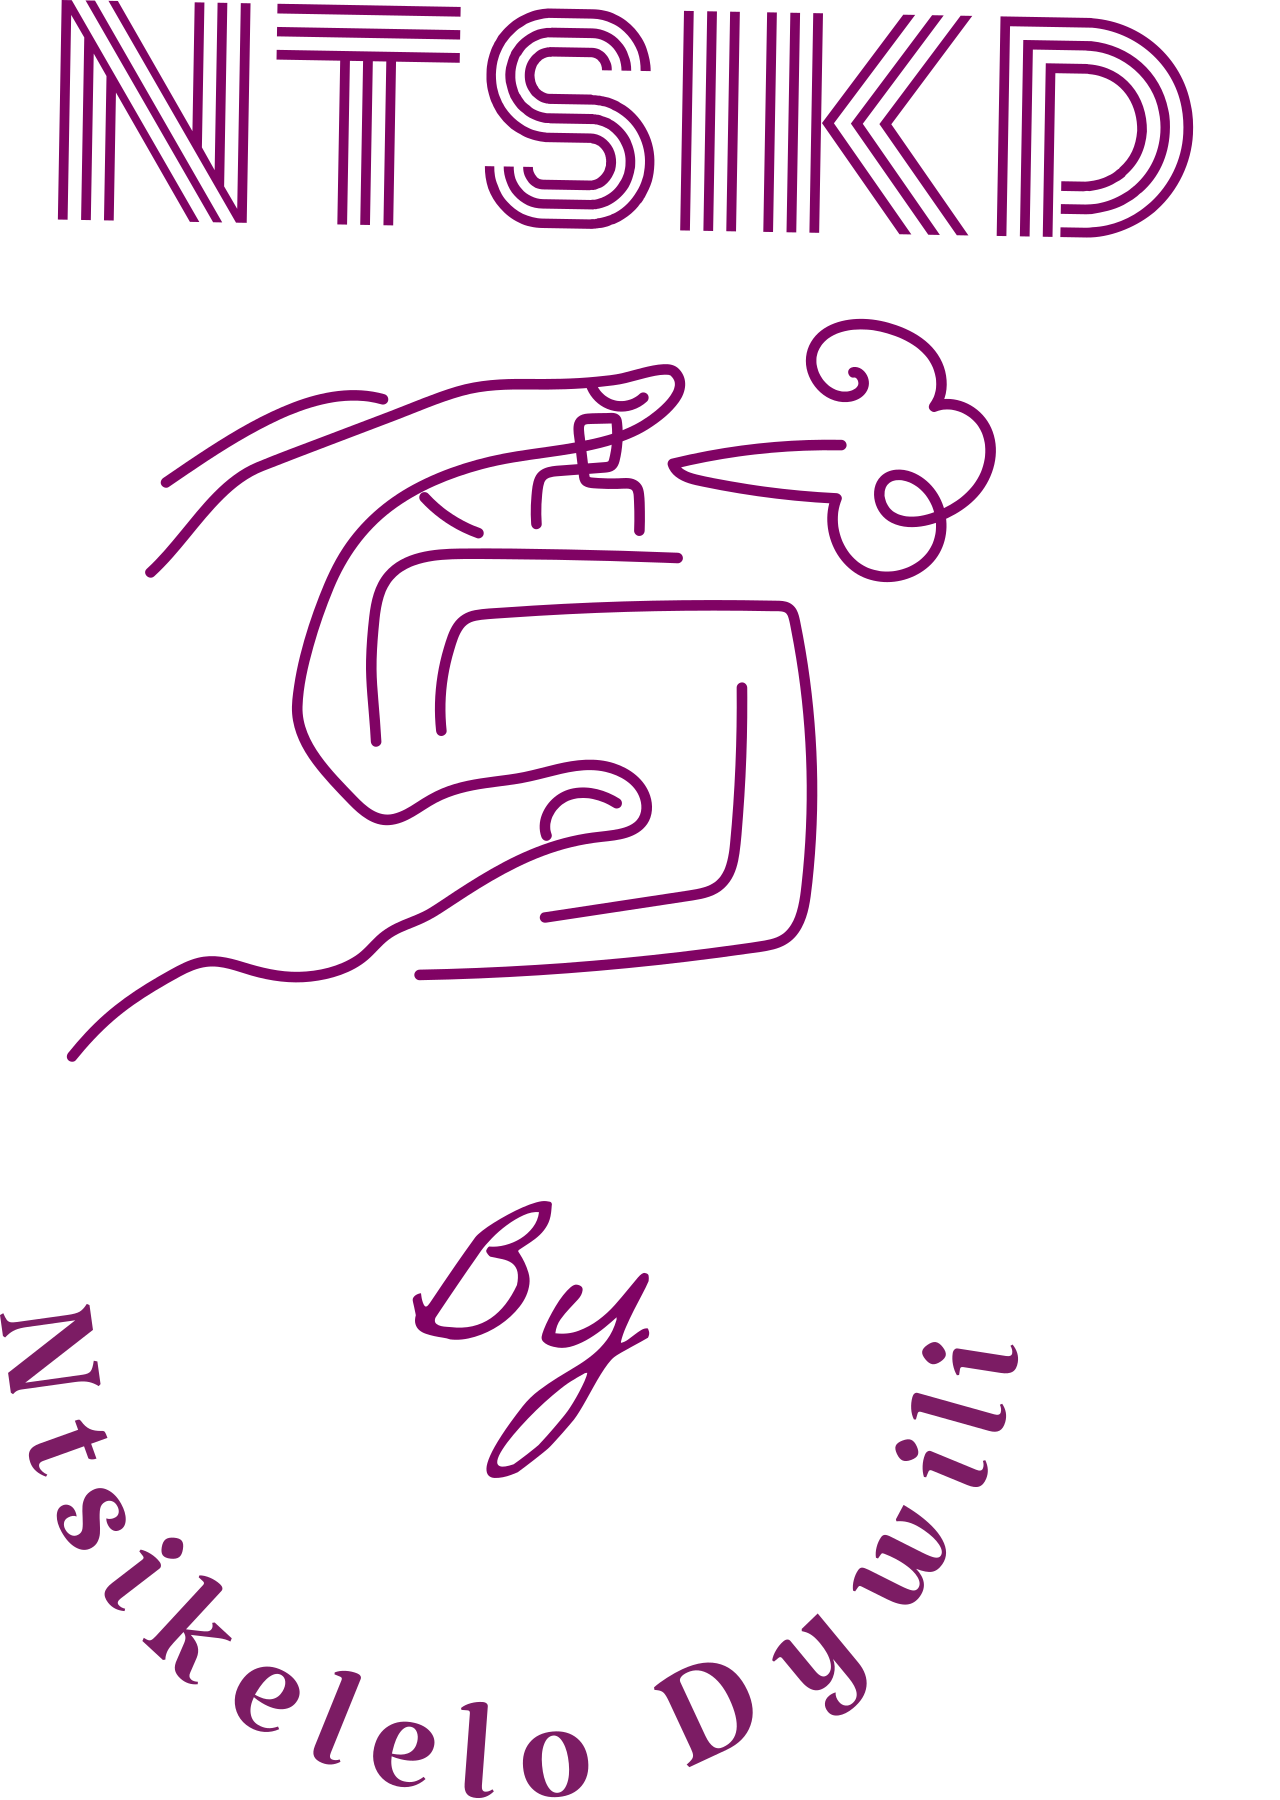 Ntsikd's logo